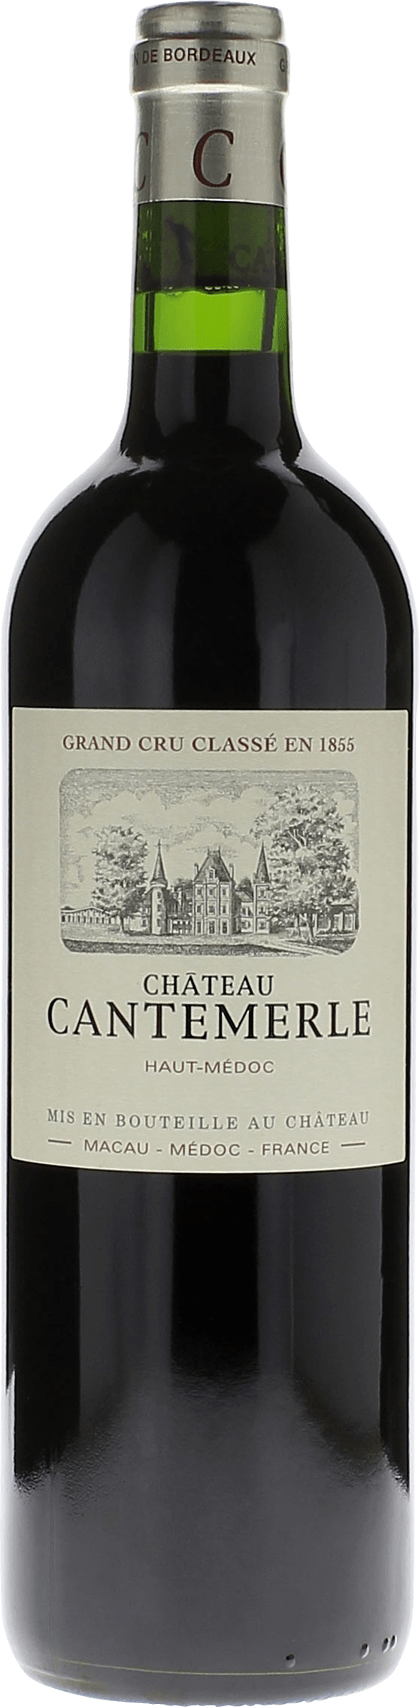 Cantemerle 2015 5me Grand cru class Mdoc, Bordeaux rouge